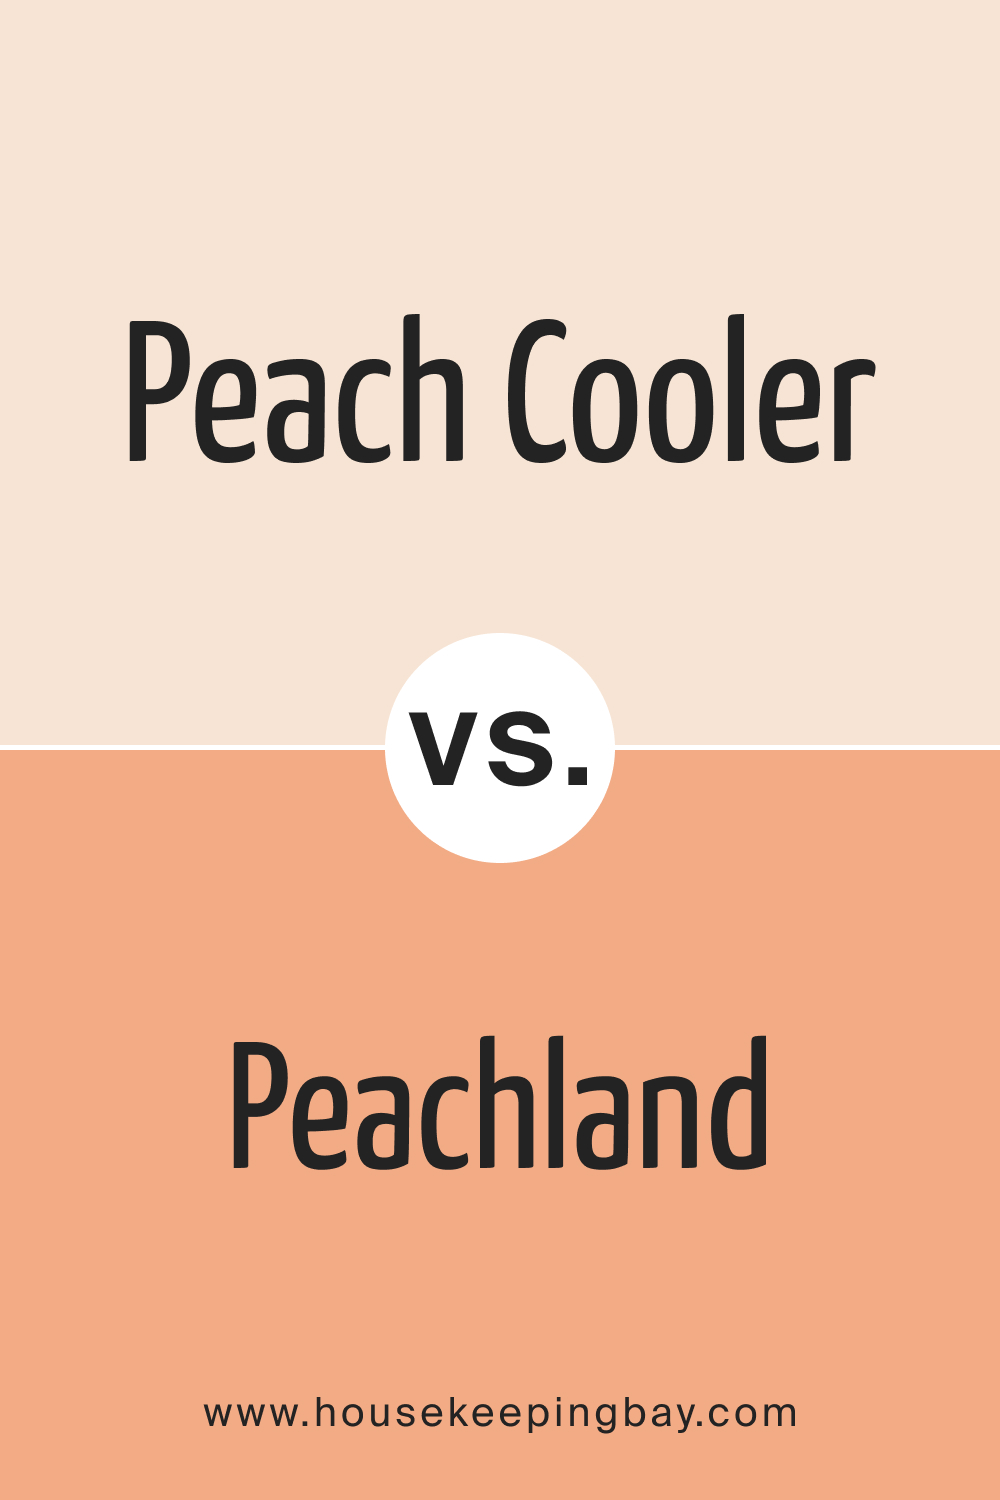 Peach Cooler 022 vs. BM 2168 40 Peachland